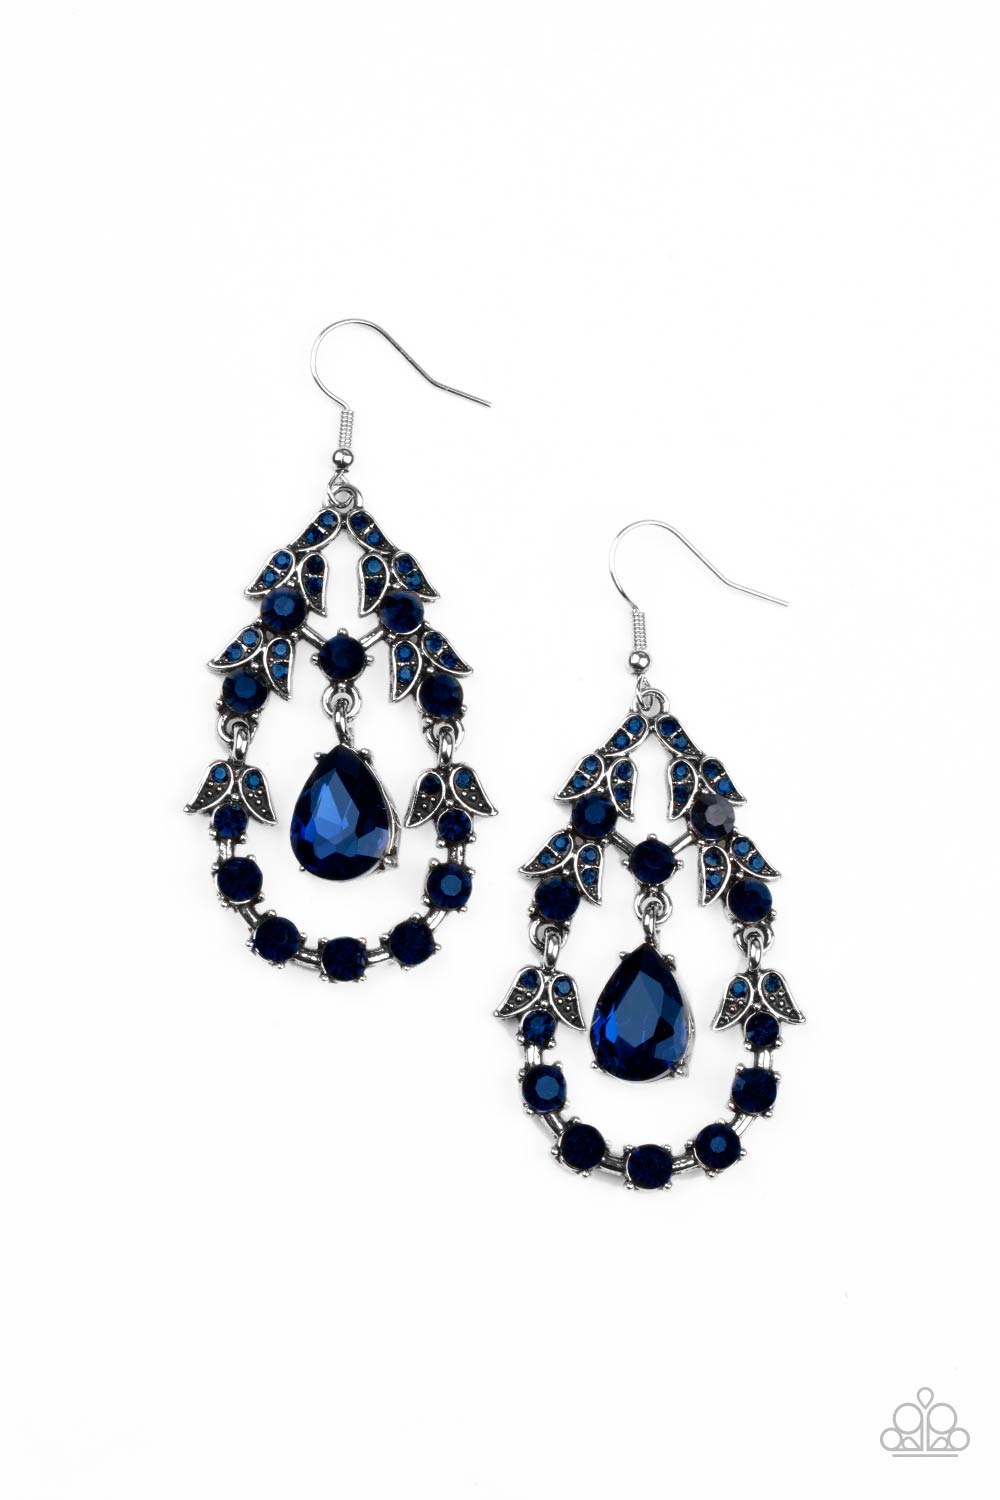 Garden Decorum Blue Rhinestone Earrings - Paparazzi Accessories- lightbox - CarasShop.com - $5 Jewelry by Cara Jewels